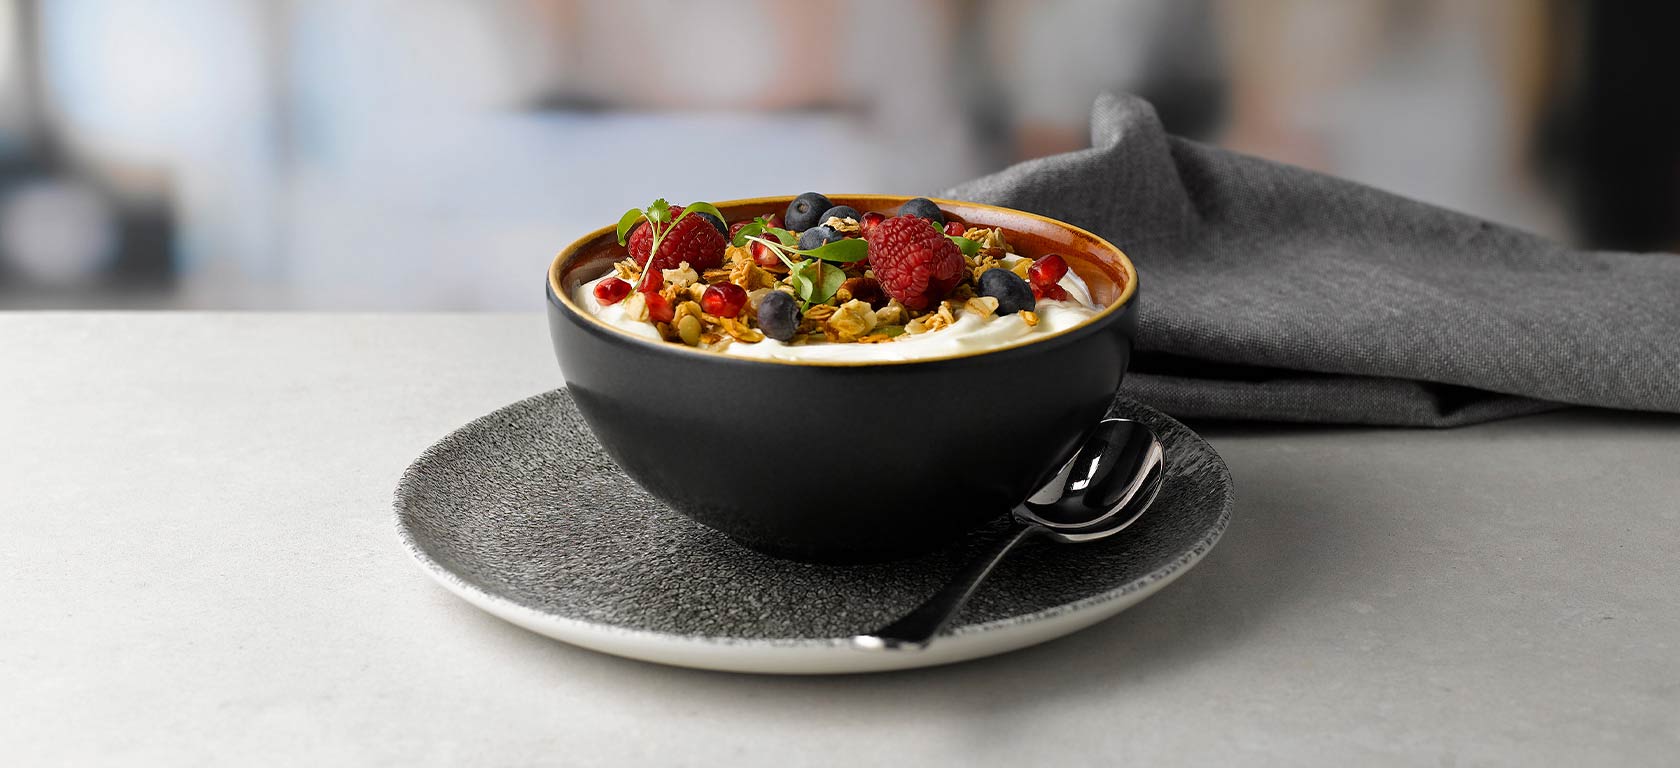 Black bowl sitting on grey saucer containing yogurt and fruit.